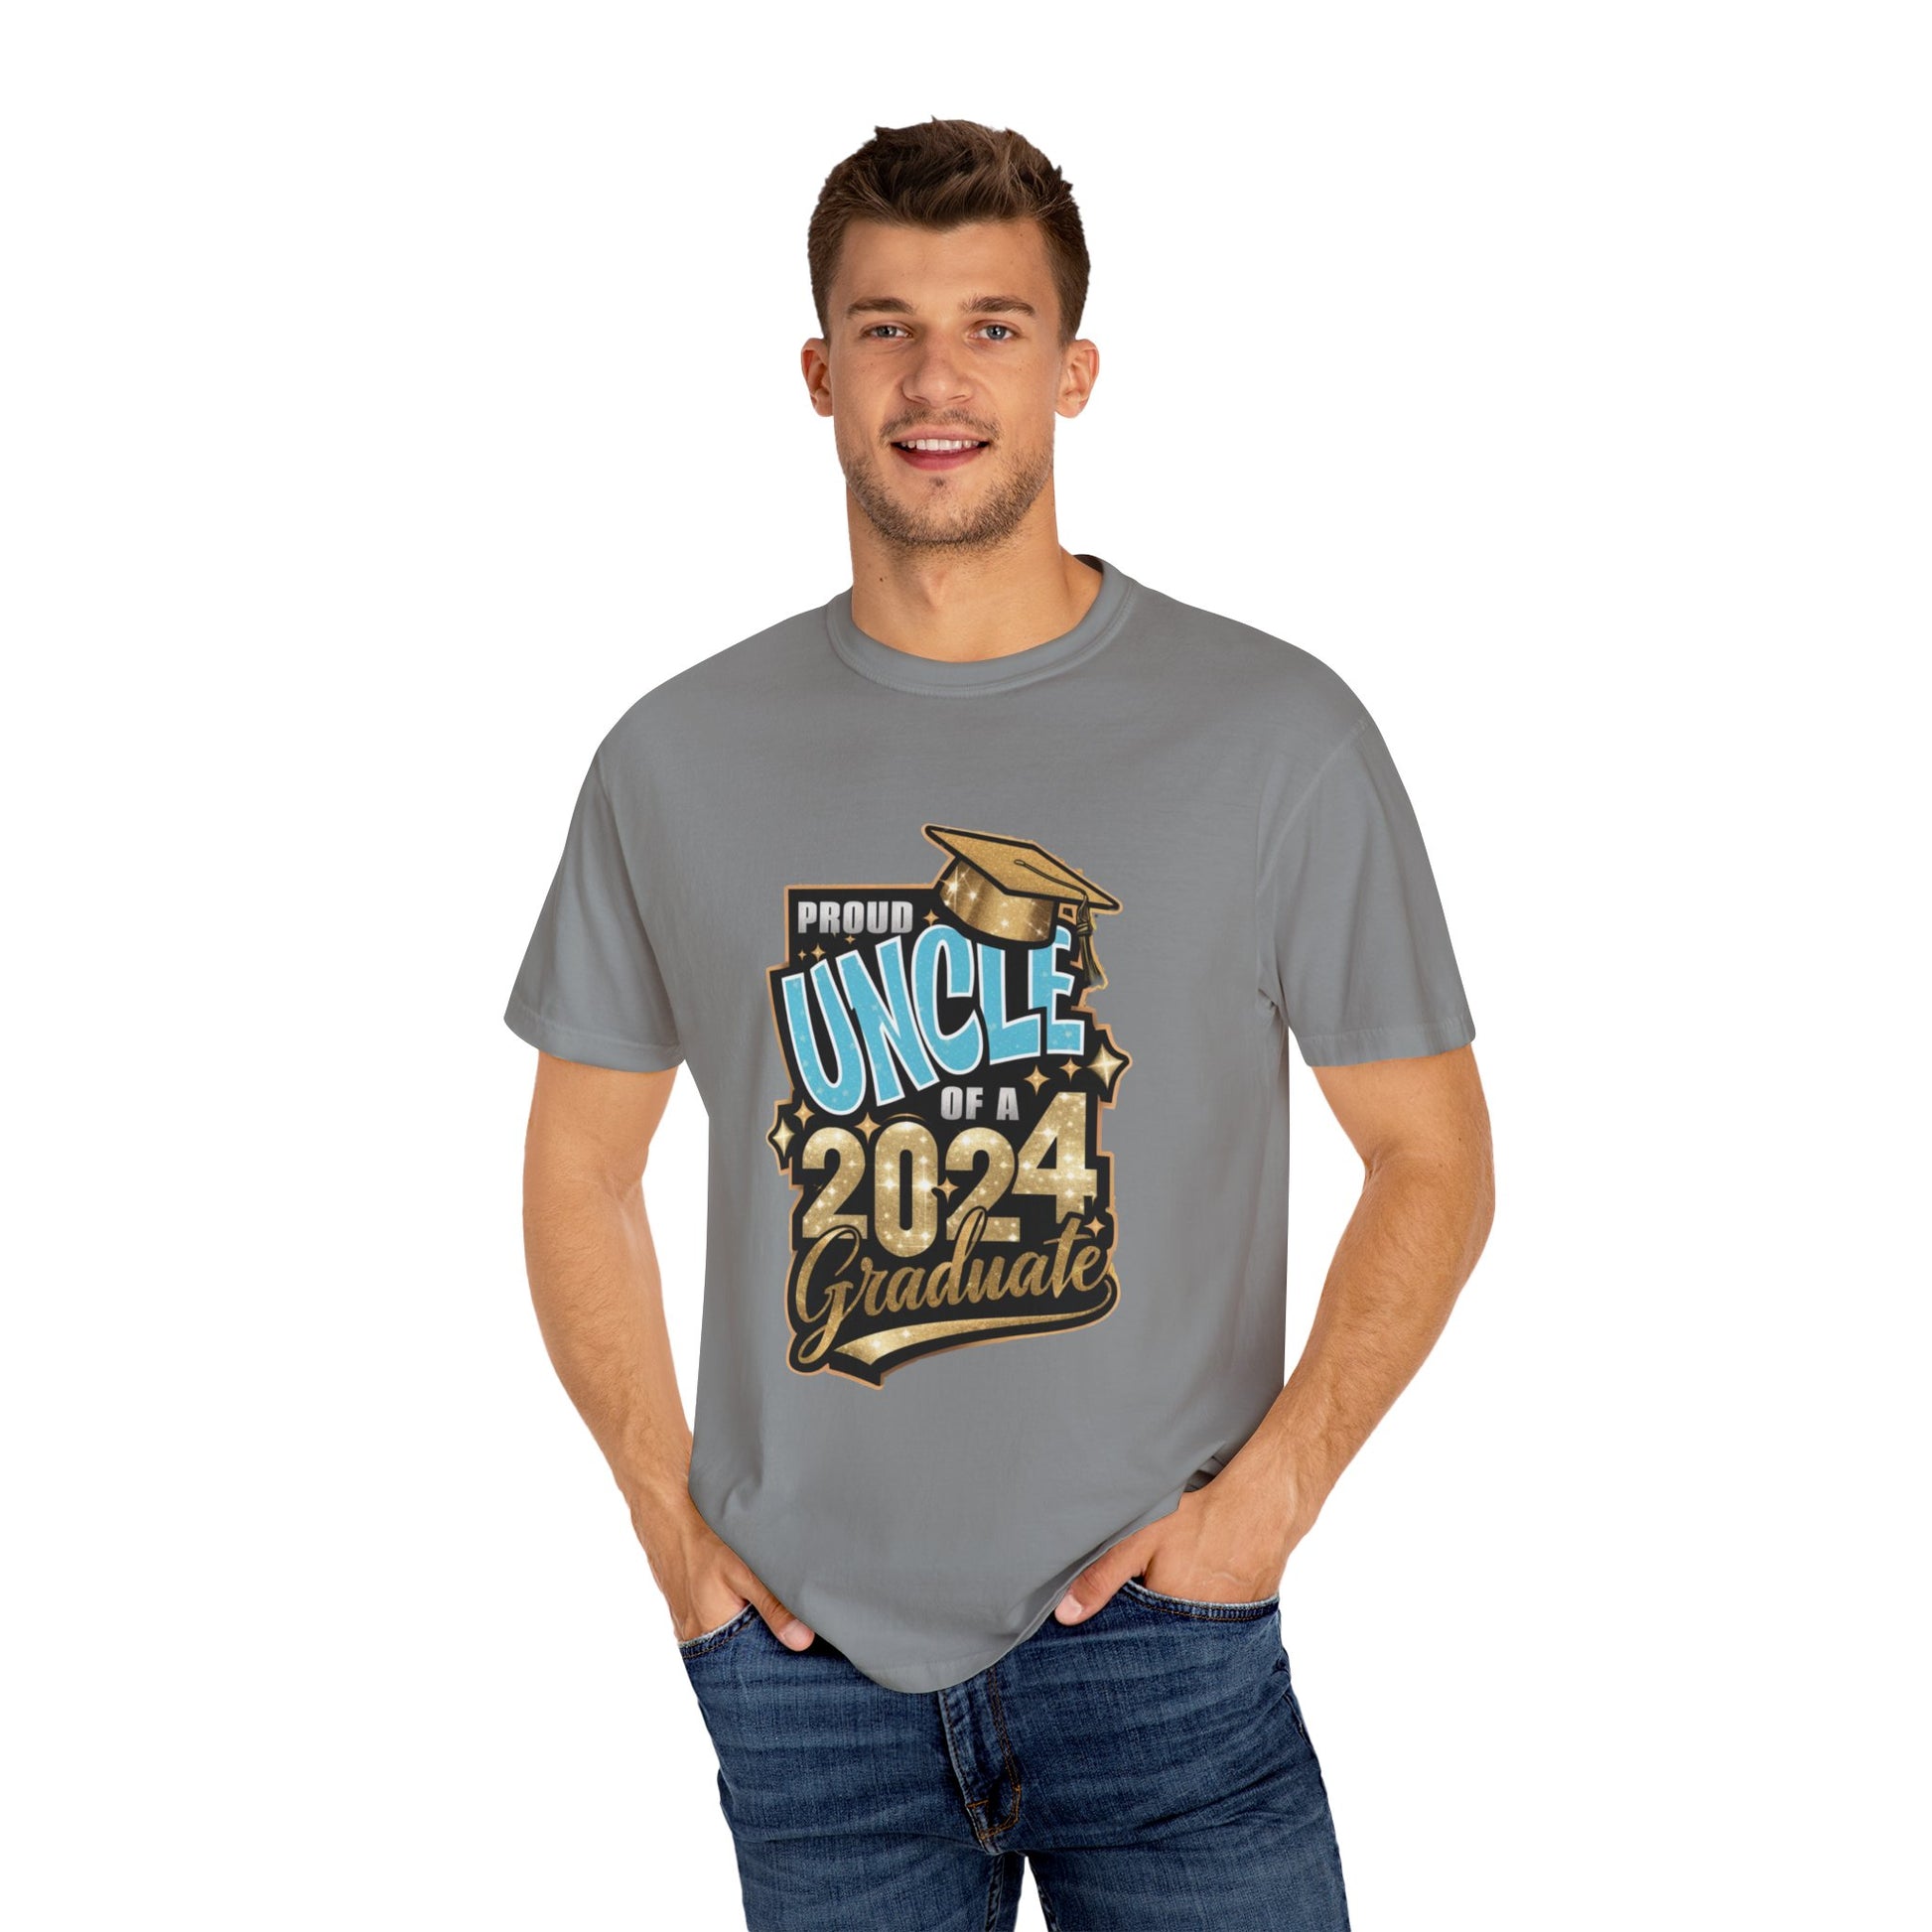 Proud Uncle of a 2024 Graduate Unisex Garment-dyed T-shirt Cotton Funny Humorous Graphic Soft Premium Unisex Men Women Granite T-shirt Birthday Gift-27